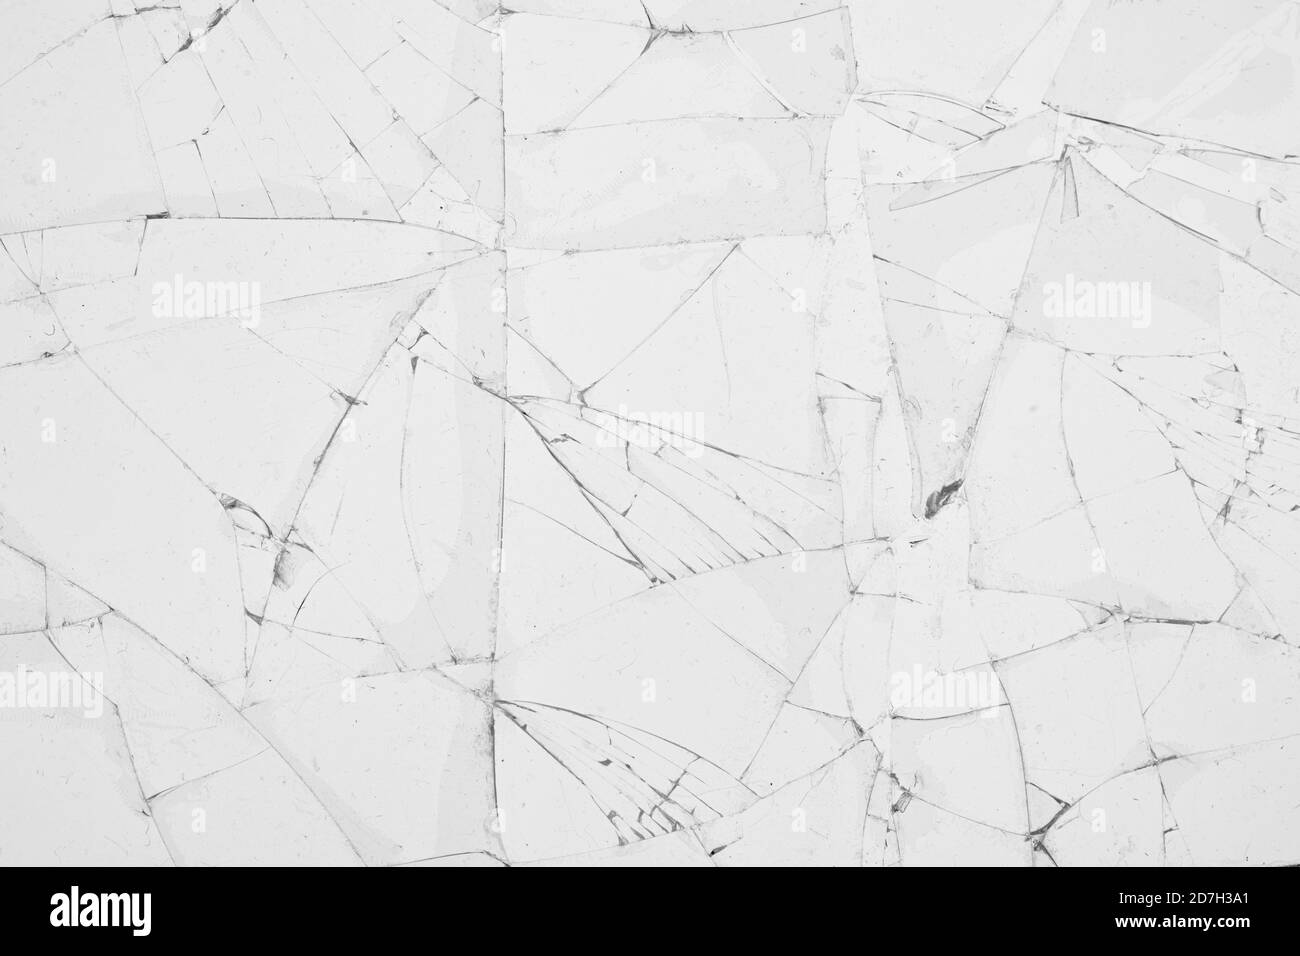 White cracked glass texture background. Texture broken glass window with cracks. Broken screen. Stock Photo